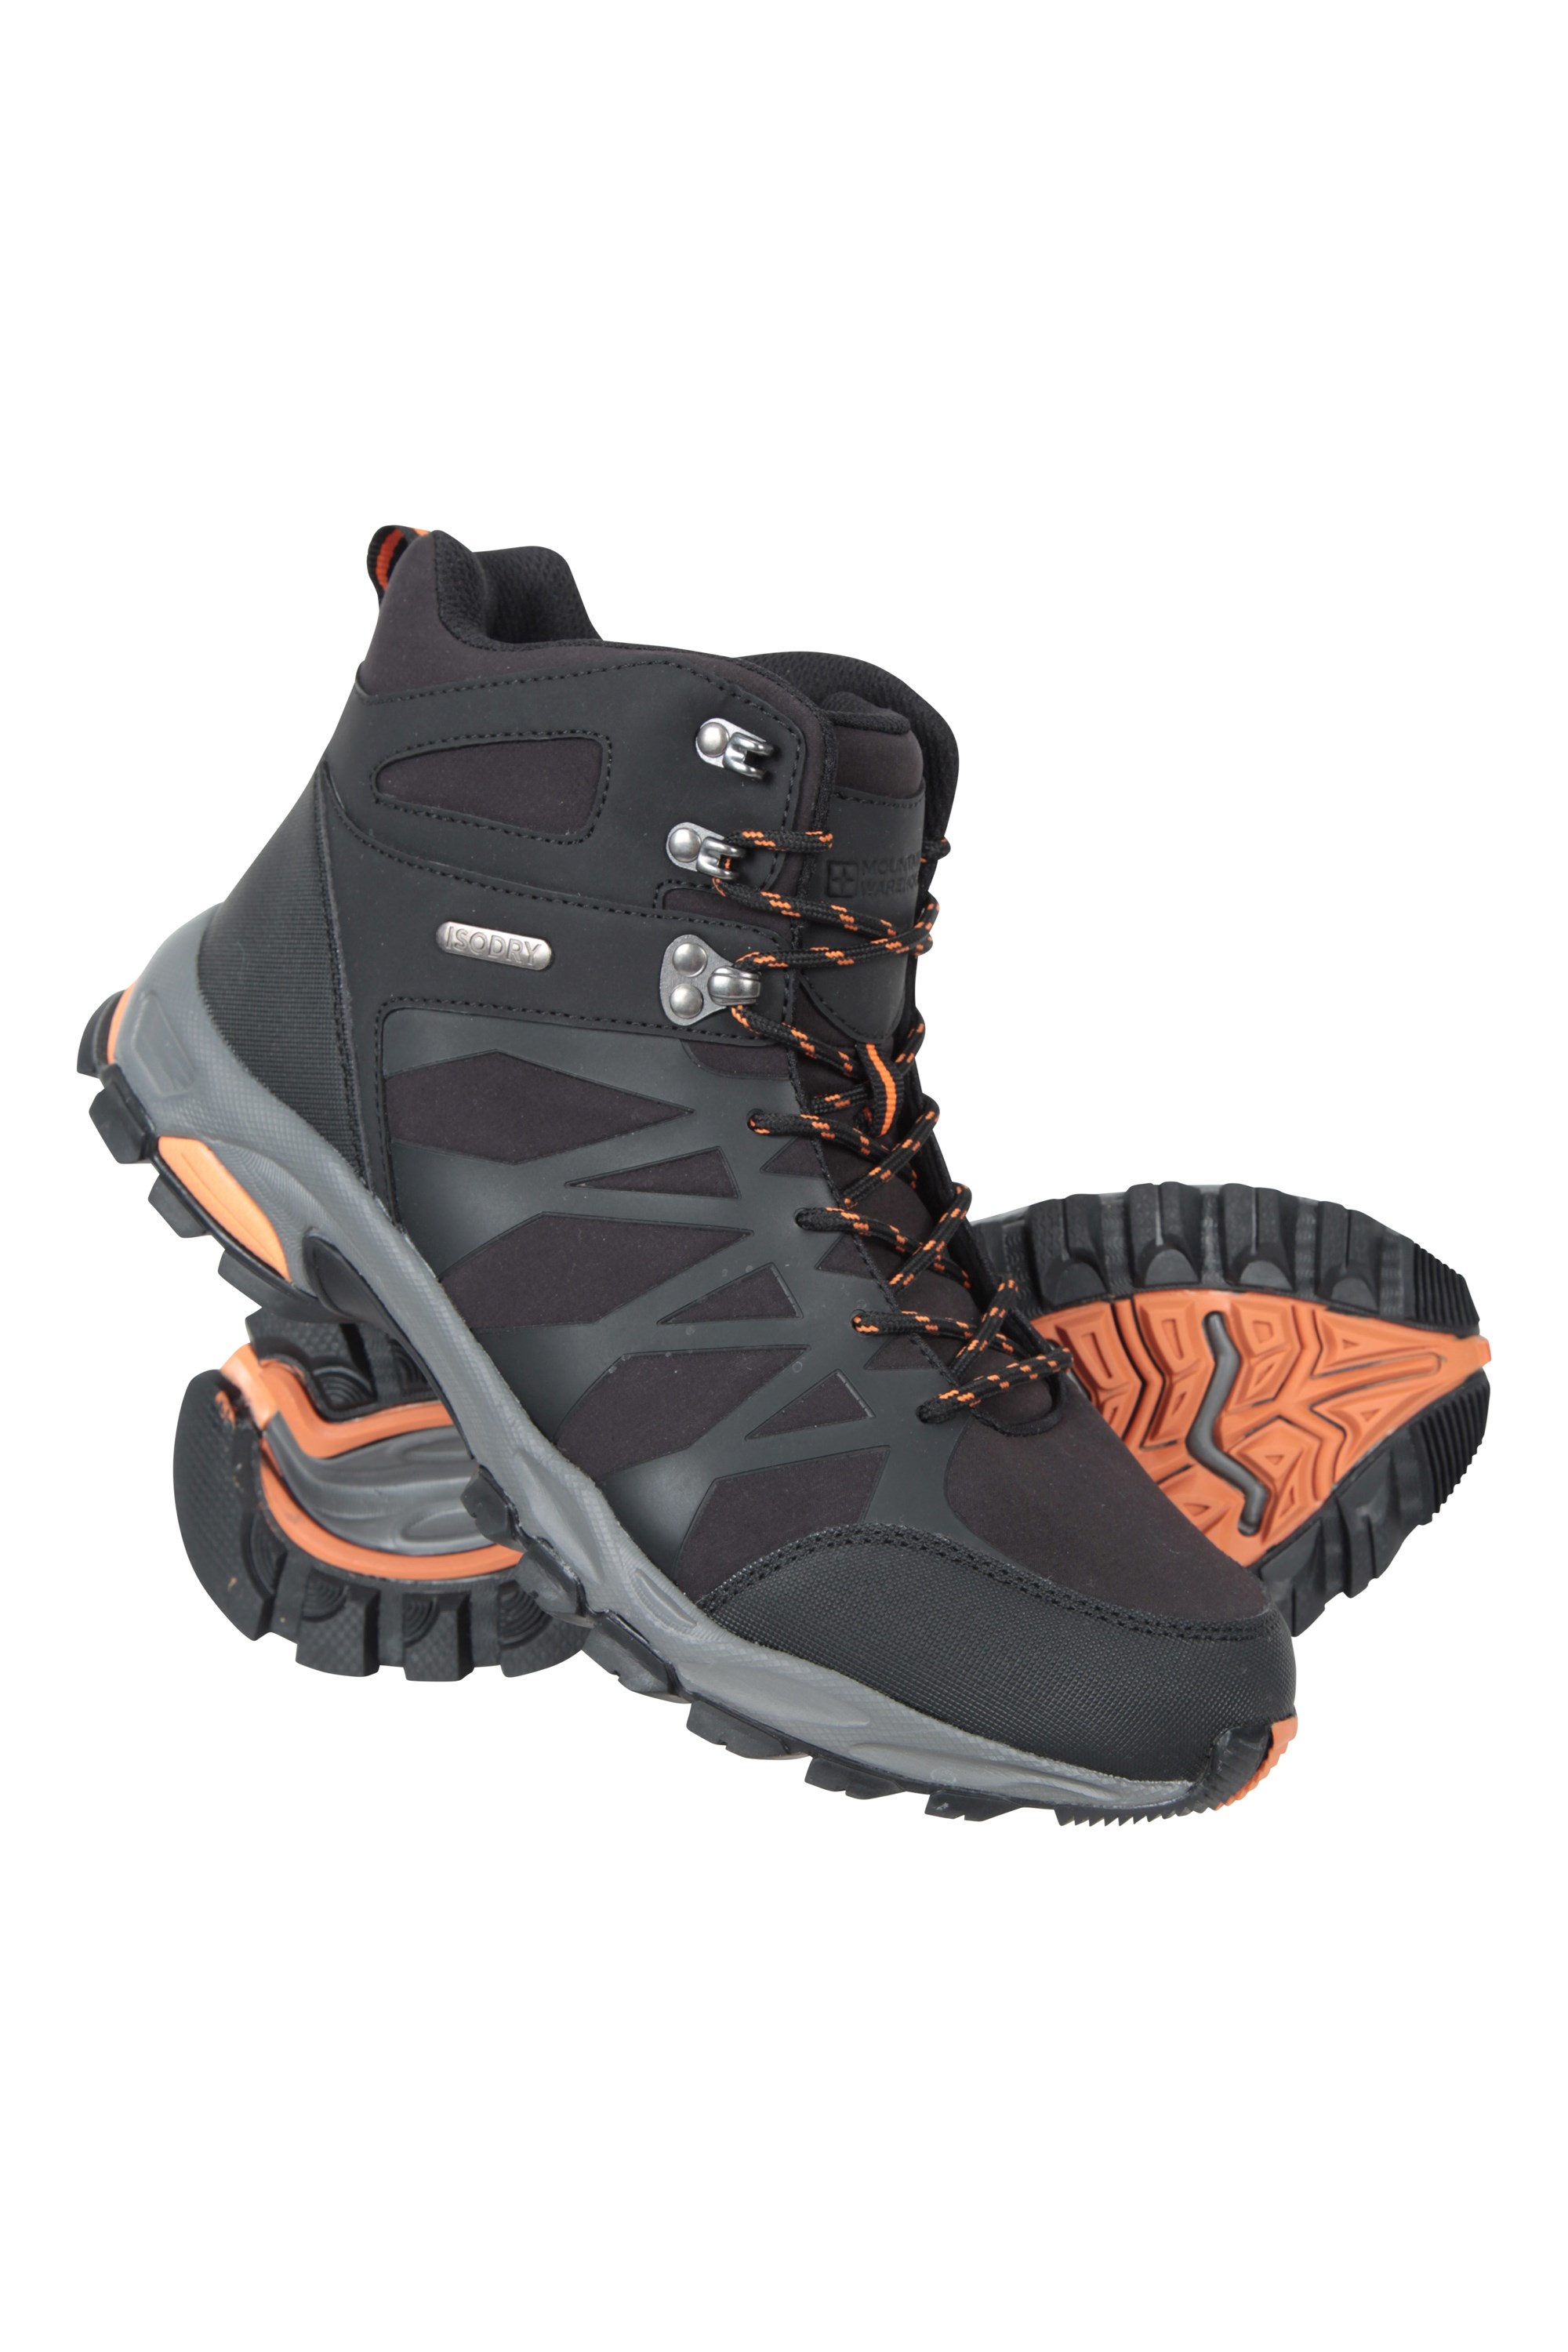 Mountain Warehouse Mountain Warehouse Gorge Mens Boots Waterproof Breathable Hiking Walking 